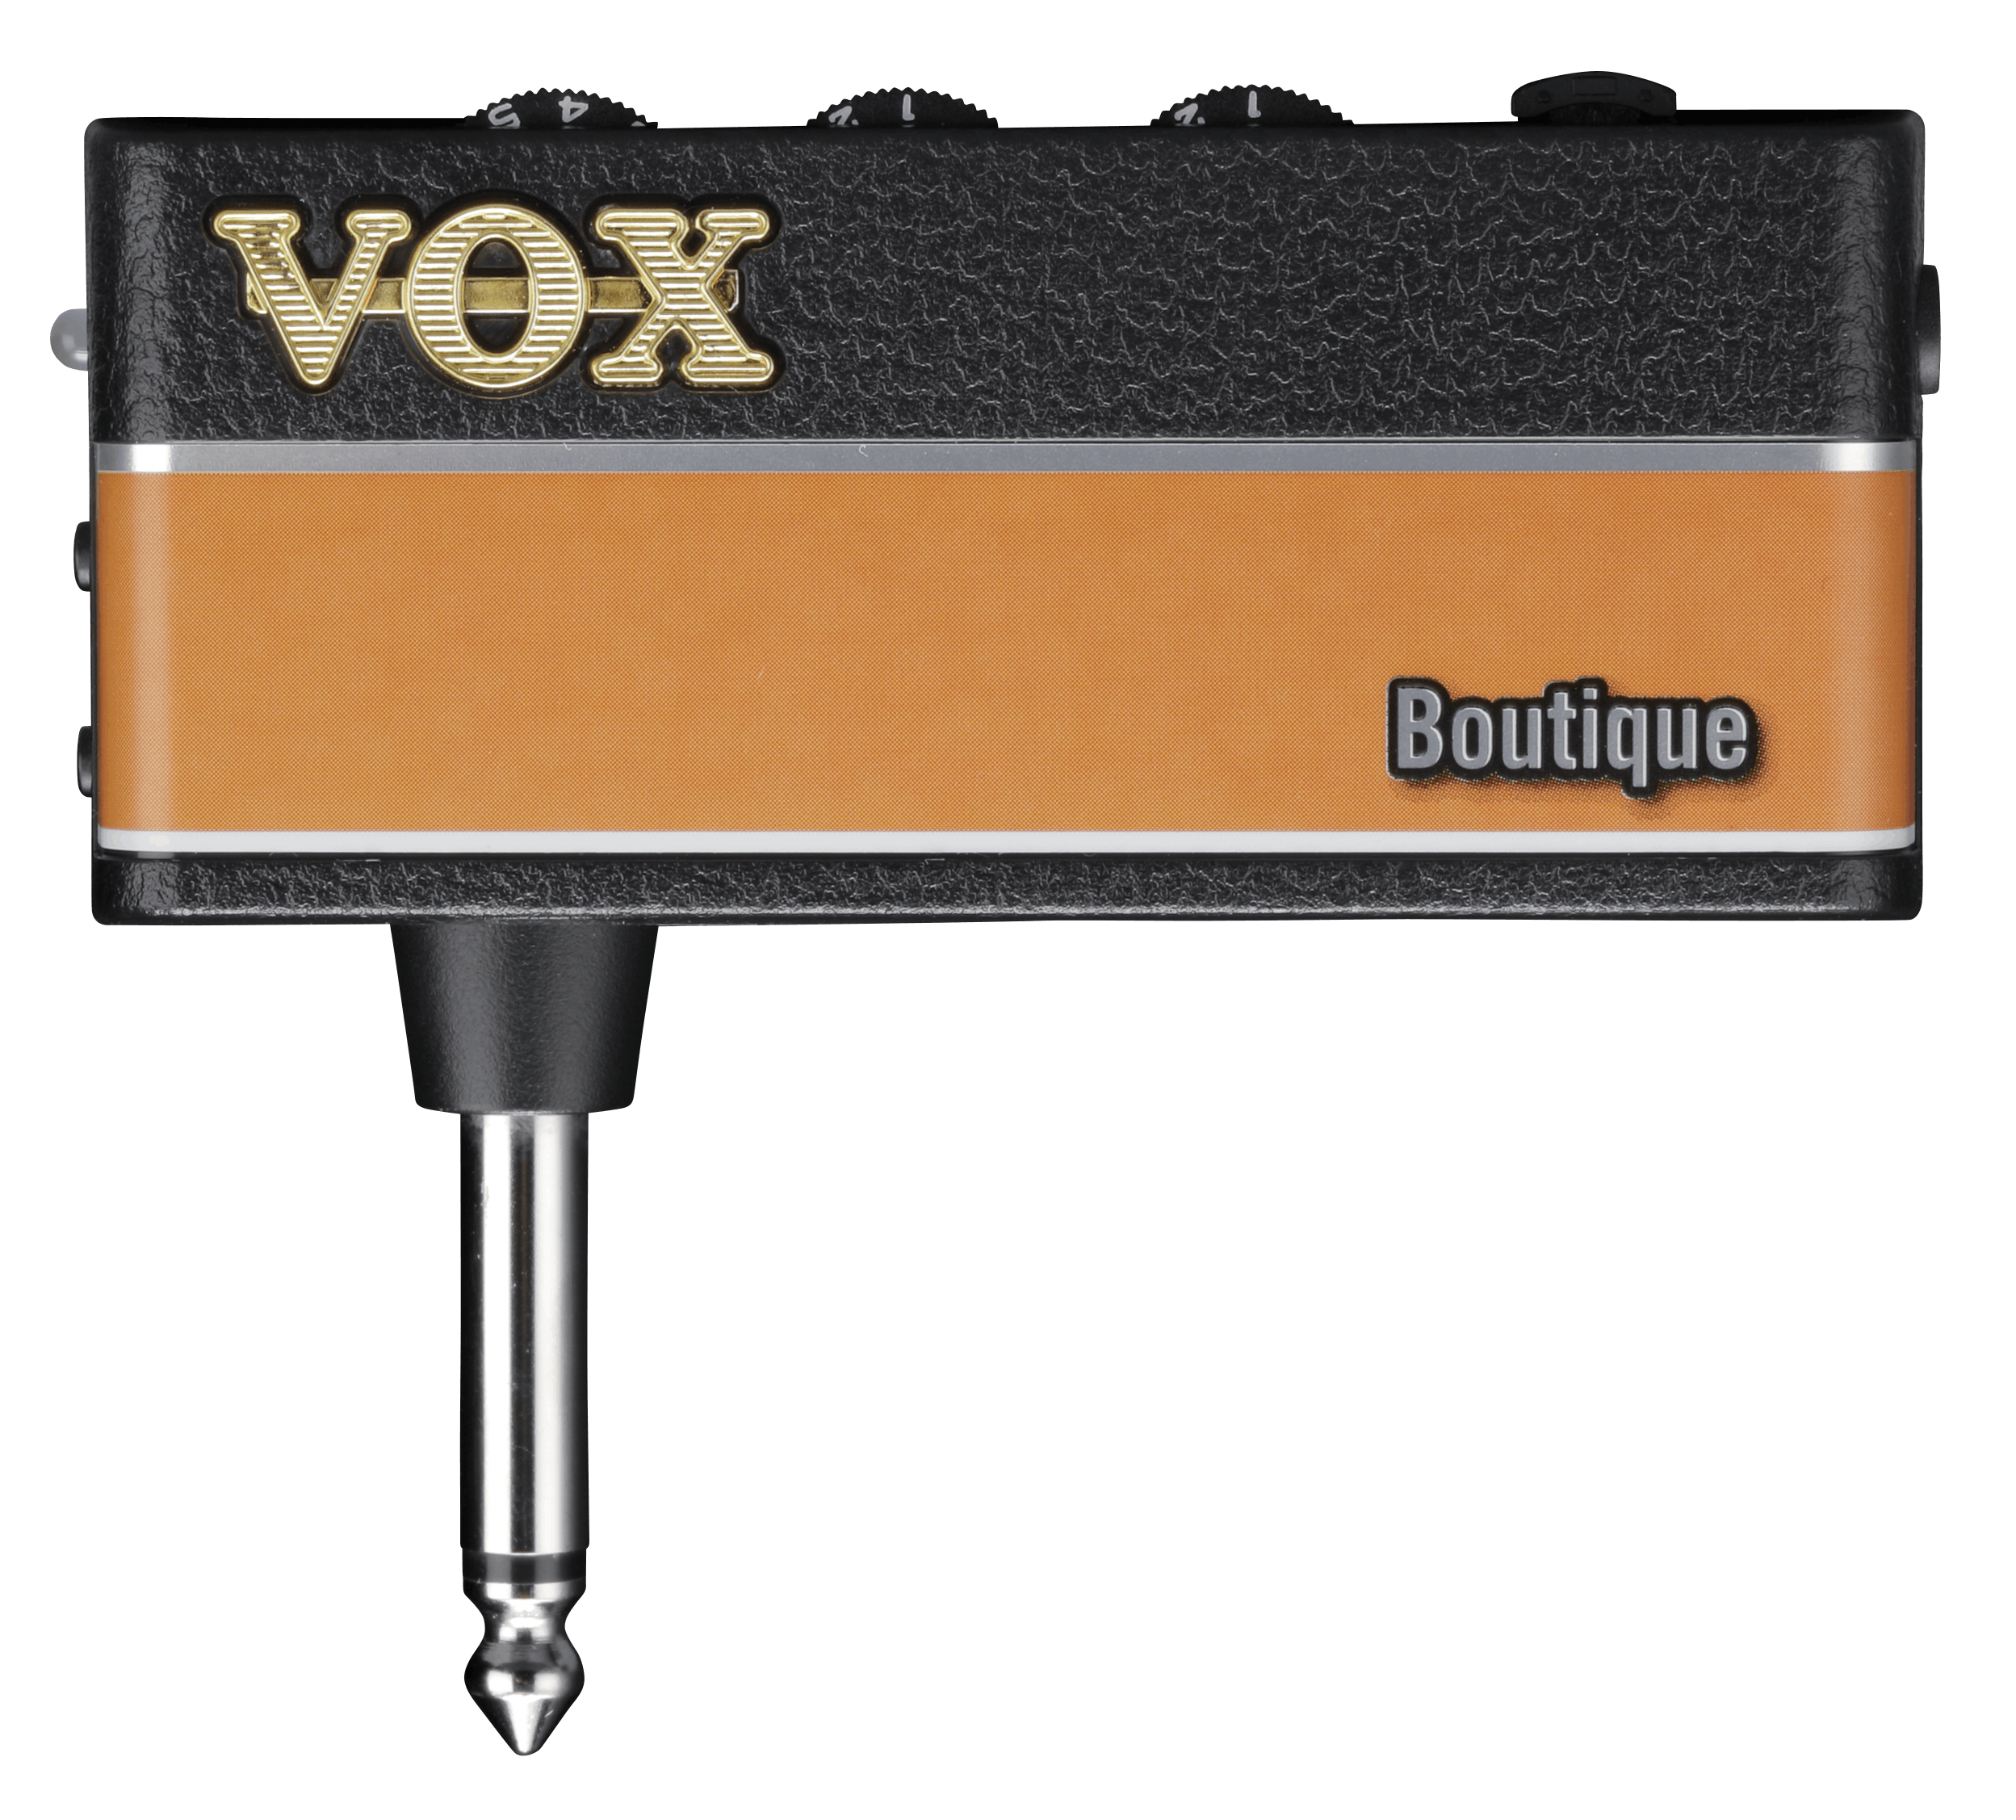 Vox amPlug 3 Boutique